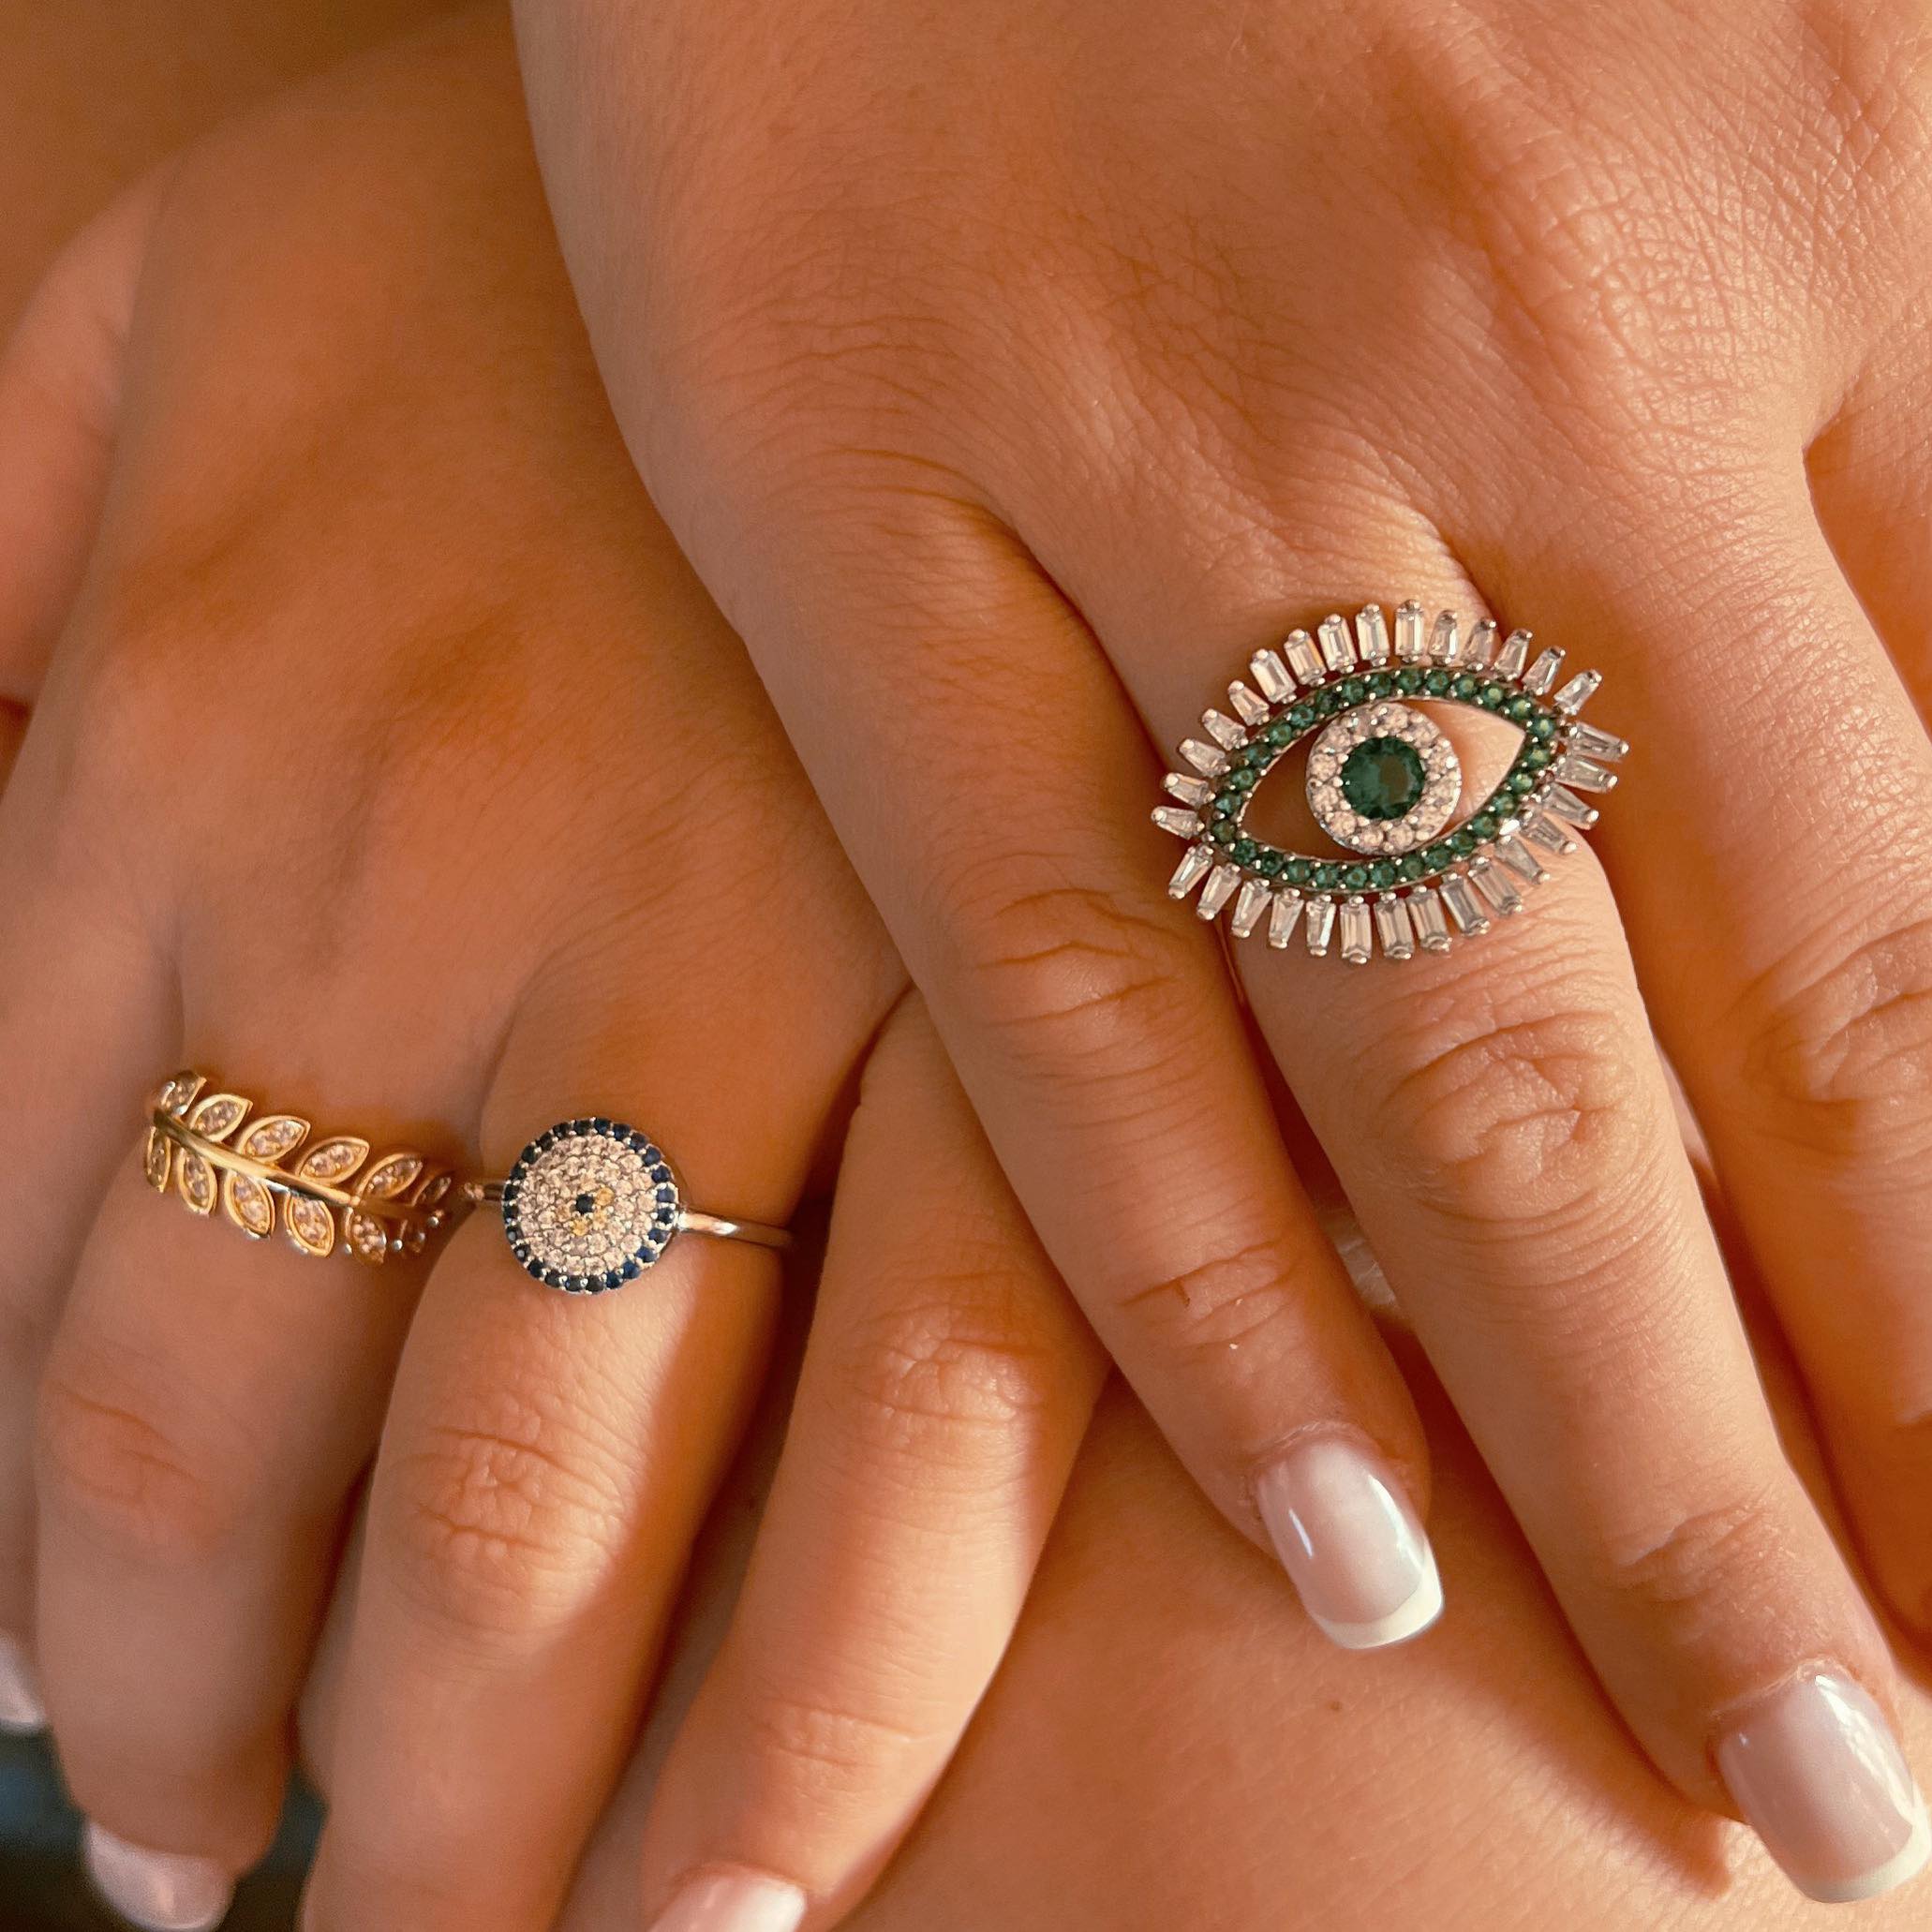 Sterling Silver Small Eye Lashes Ring, Silver Ring, Eye Ring